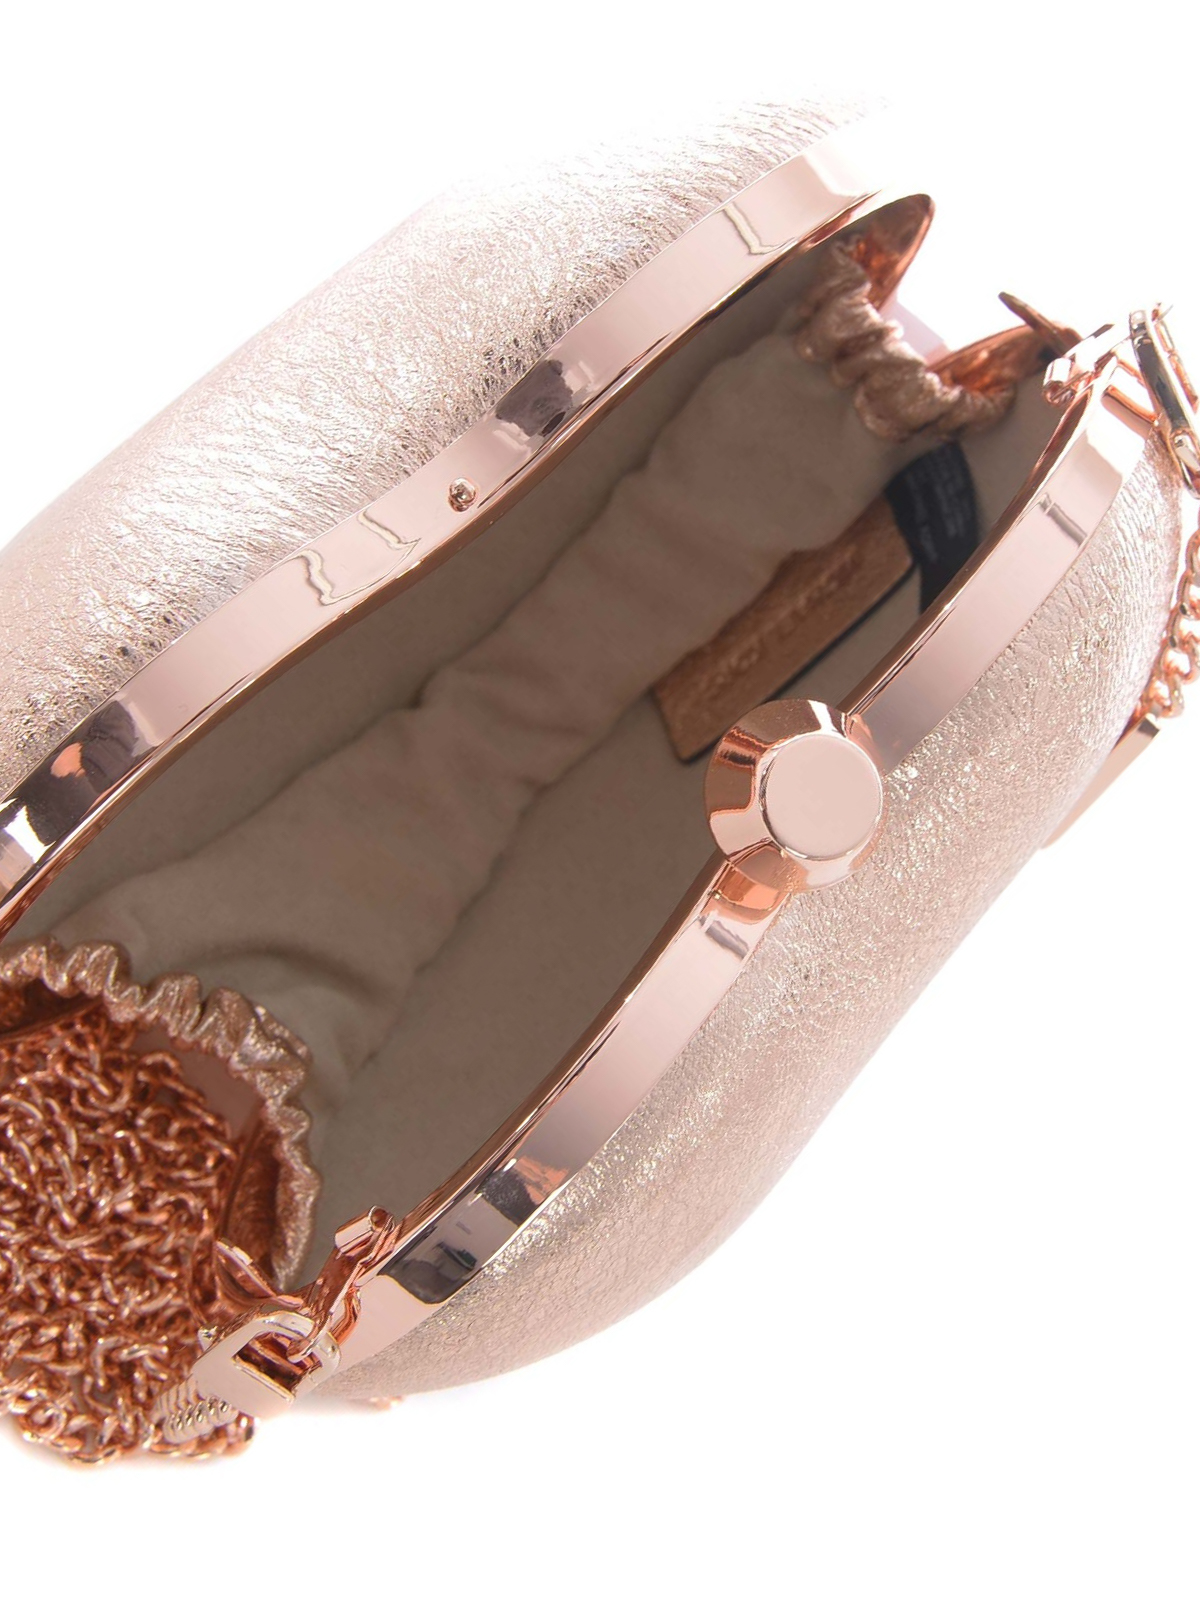 Michael Kors Box Clutch Handbags